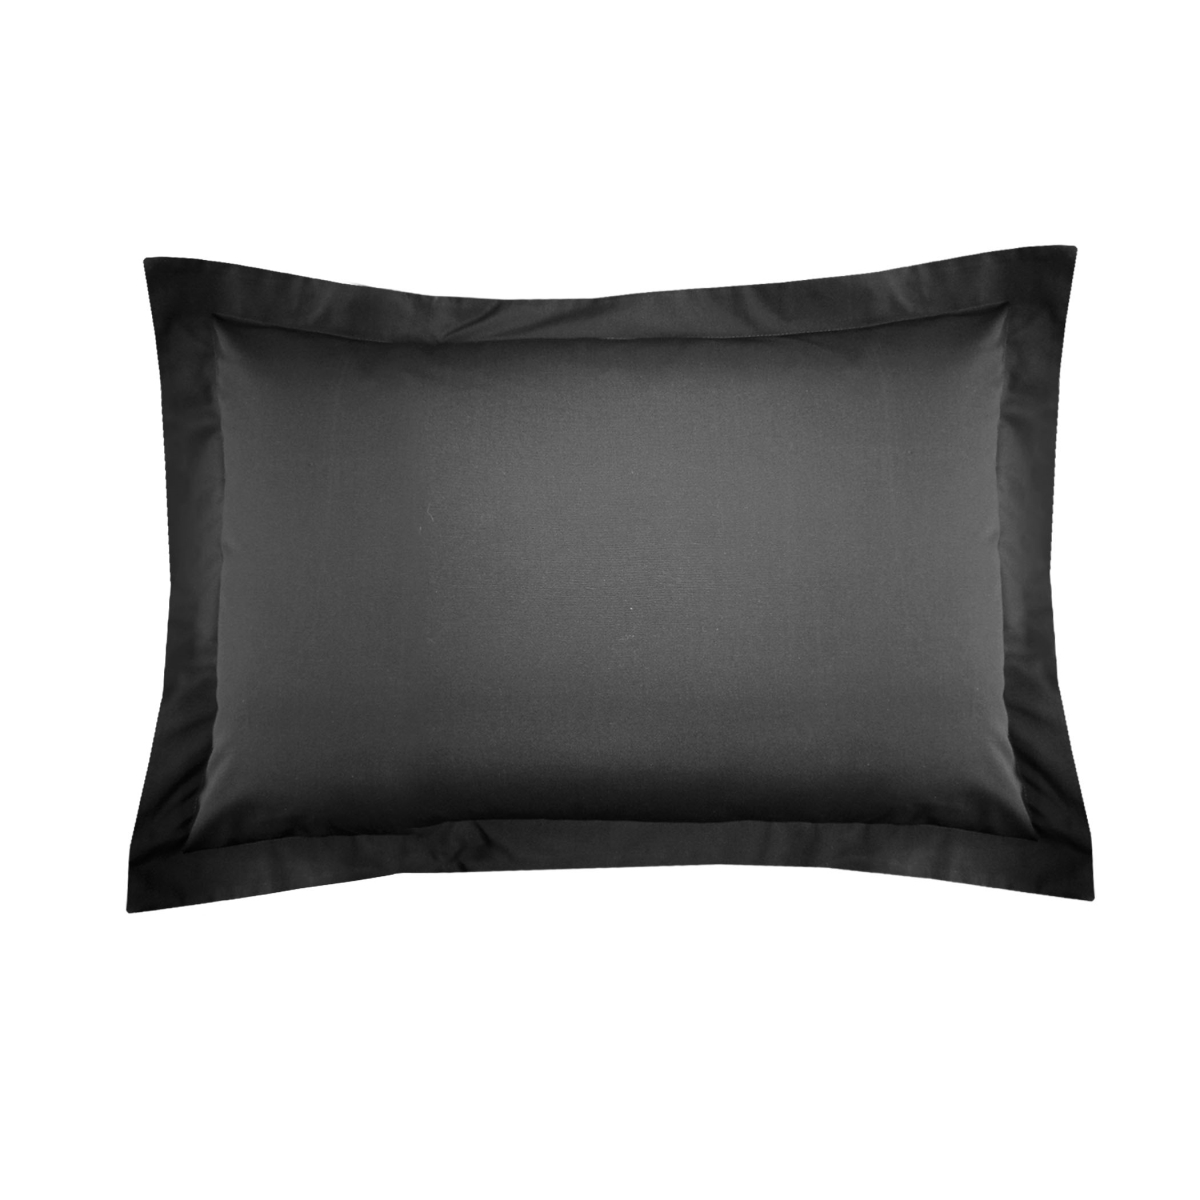 Fre201xxblac09 Poplin Tailored Pillow Sham Black - King